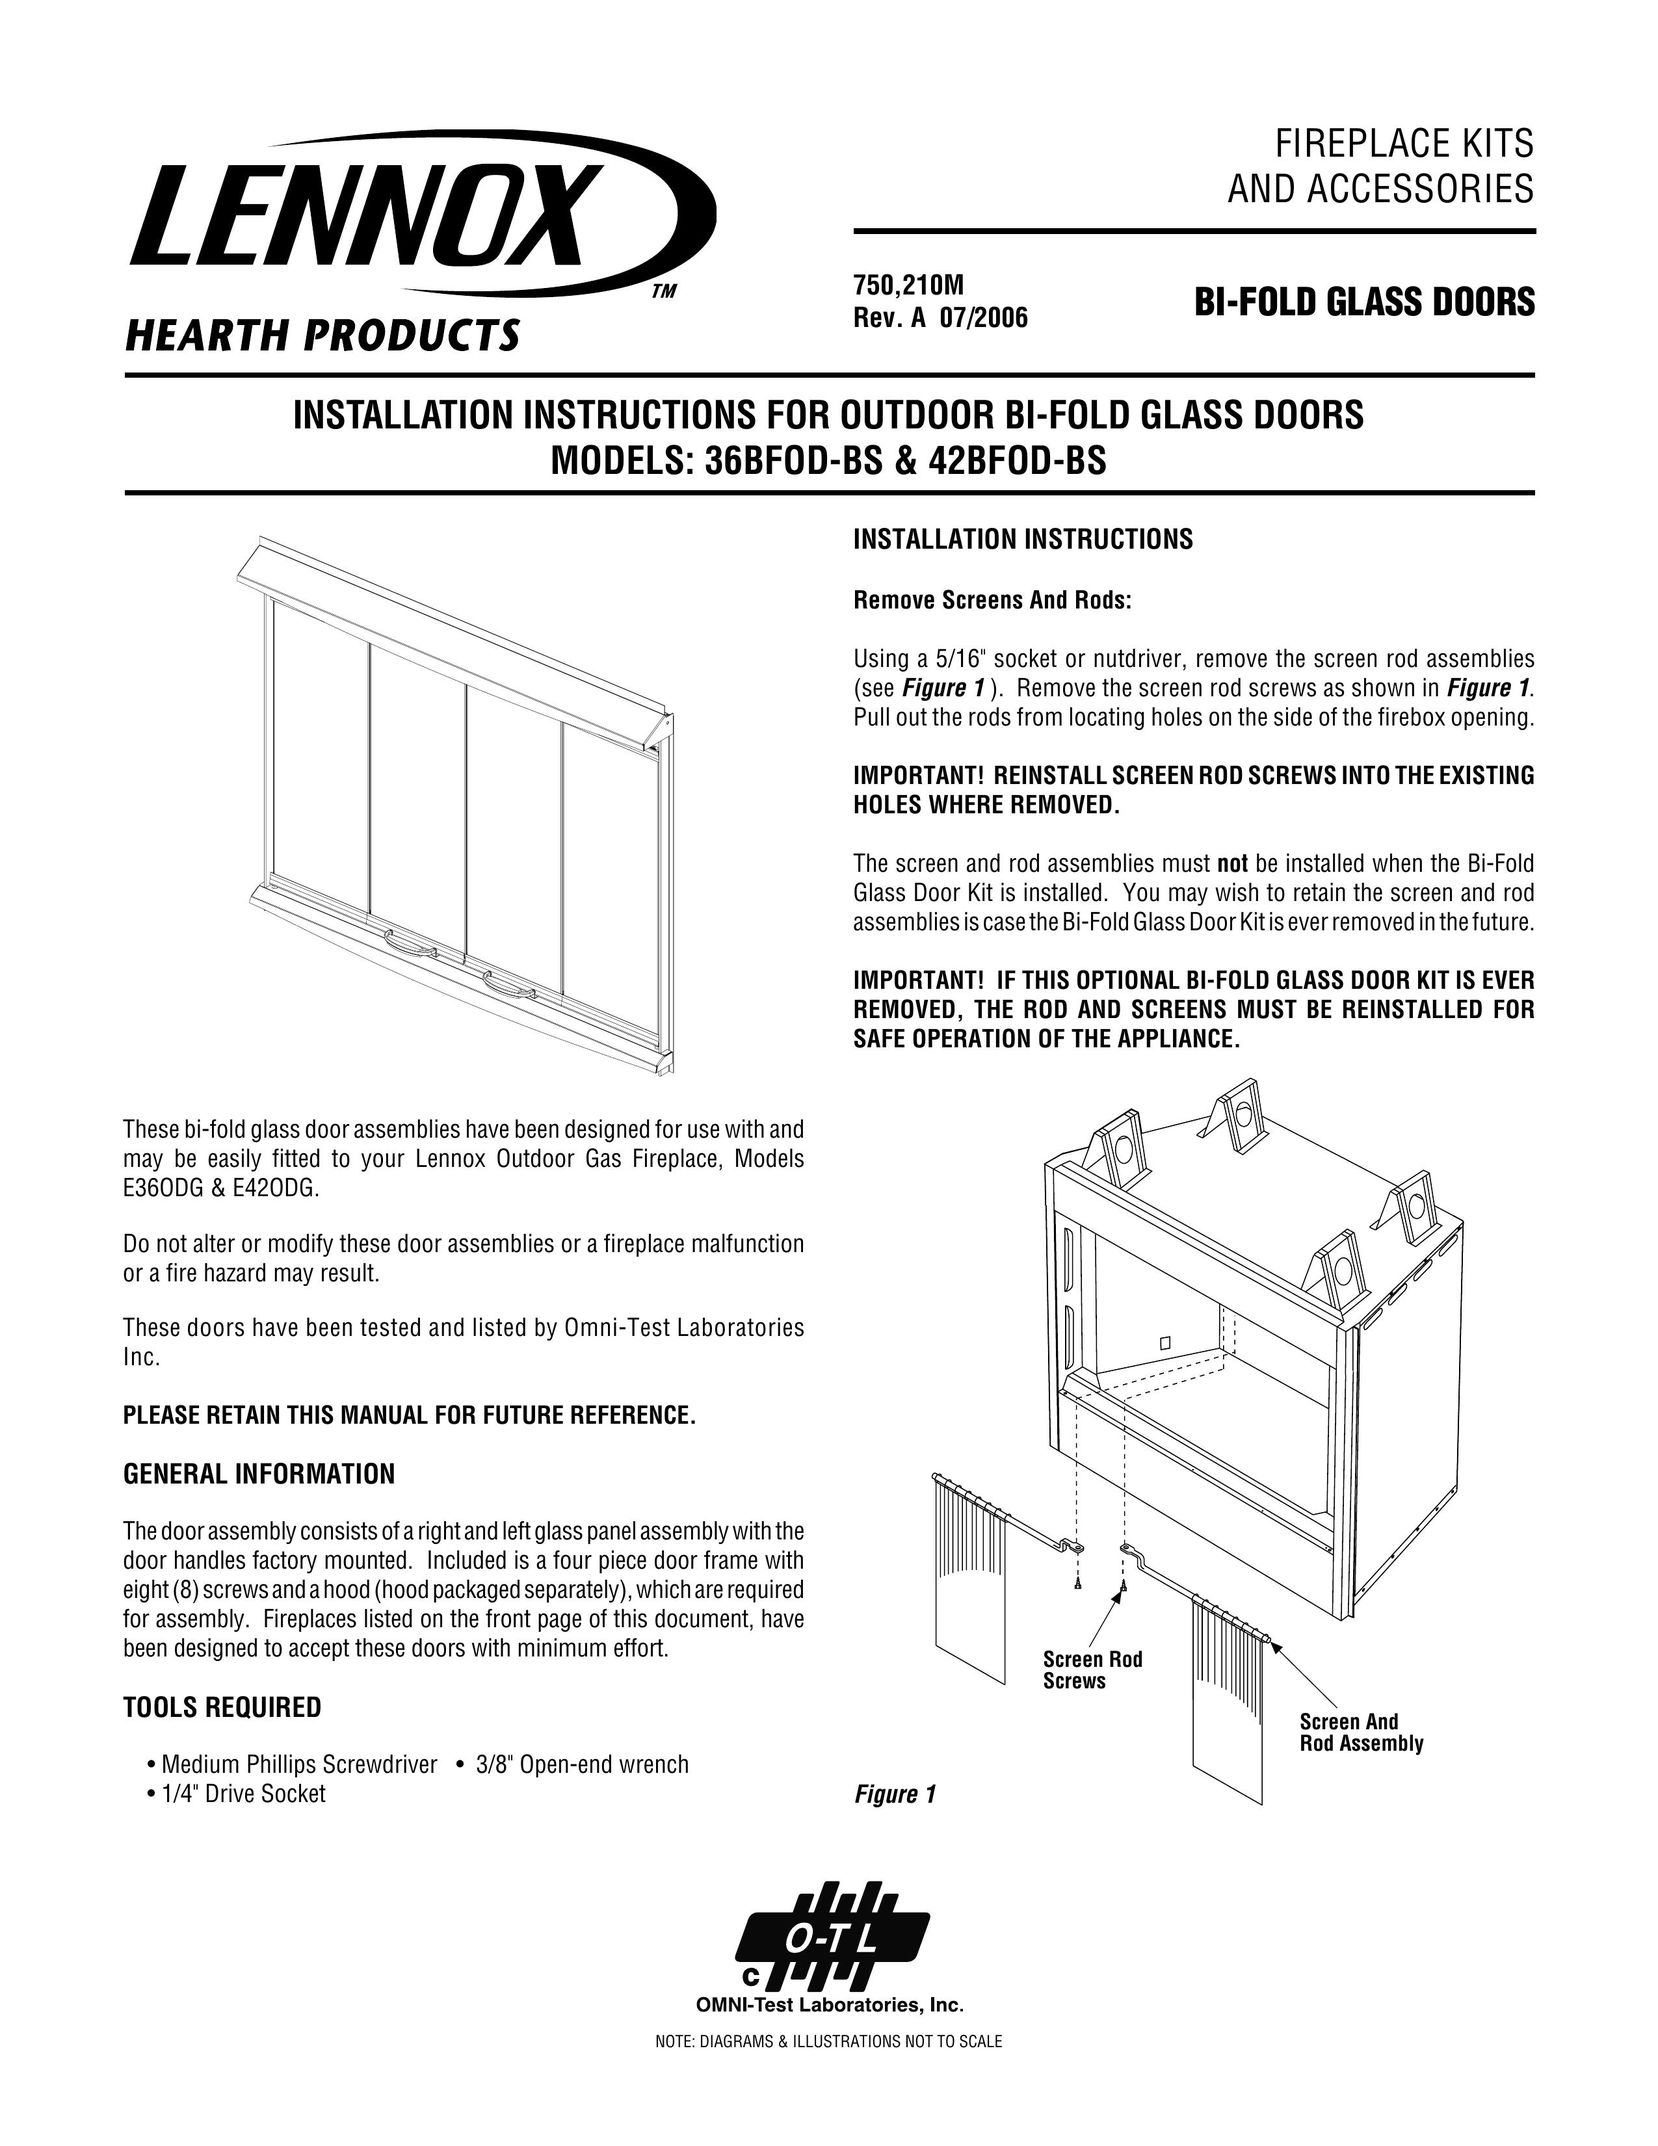 Lennox Hearth 42BFOD-BS Indoor Fireplace User Manual